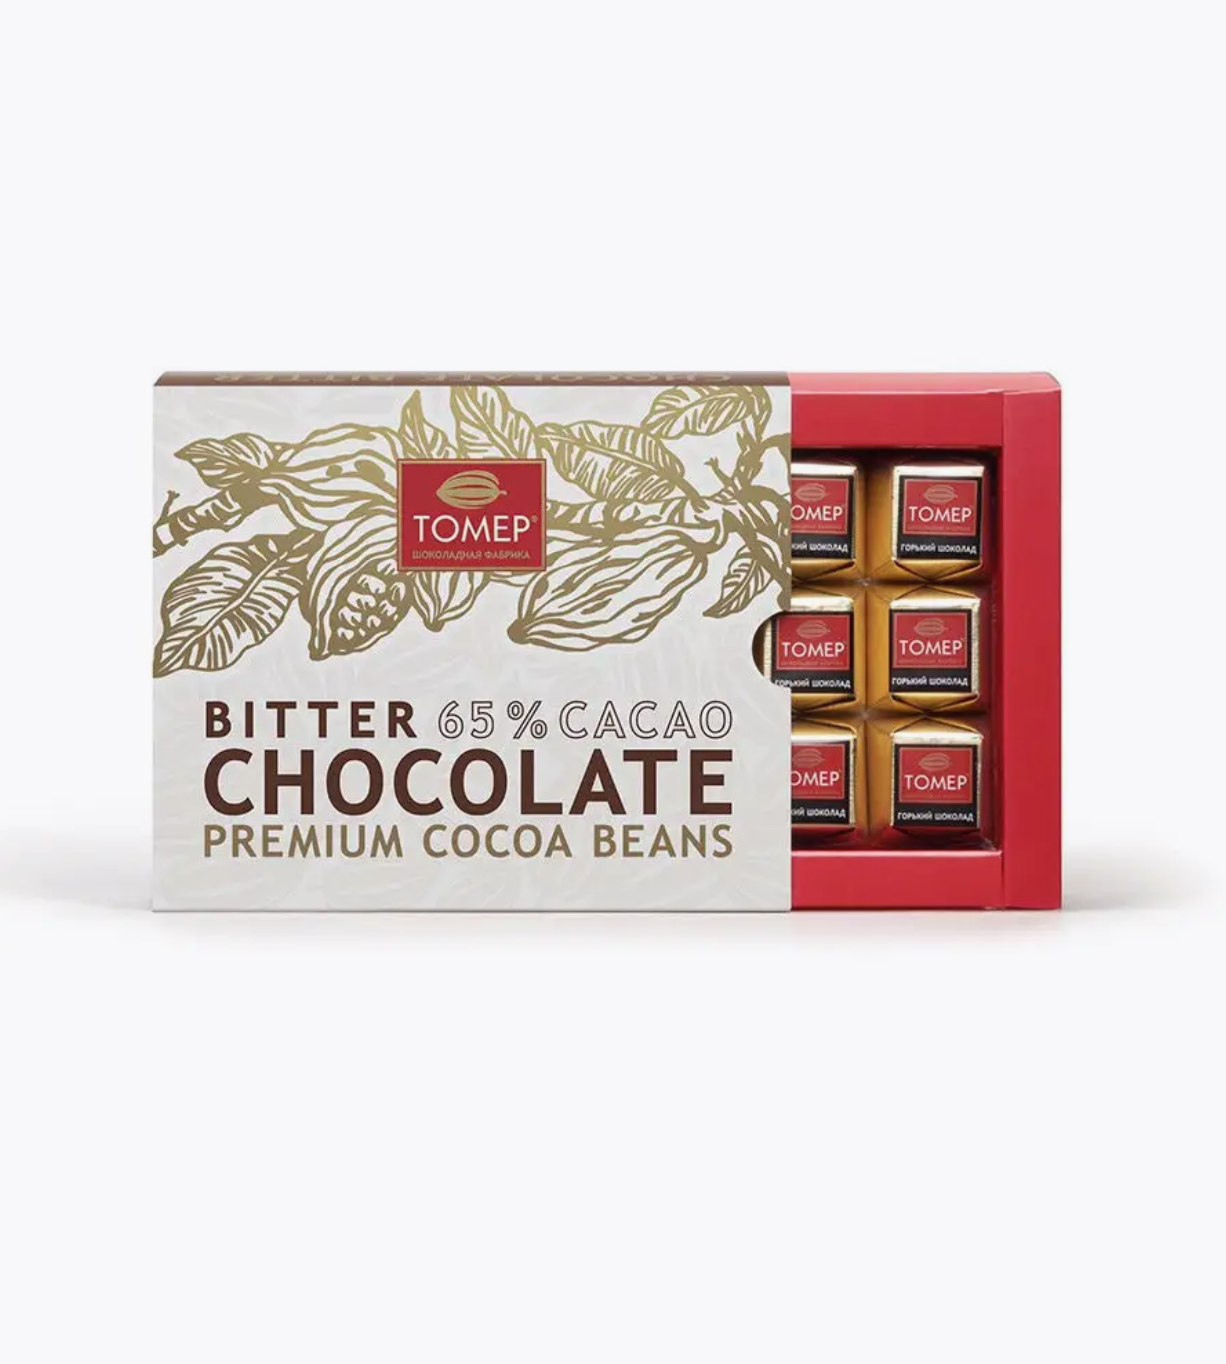 Шокоалд "Томер" горький 65% какао слайдер 150г/Томер